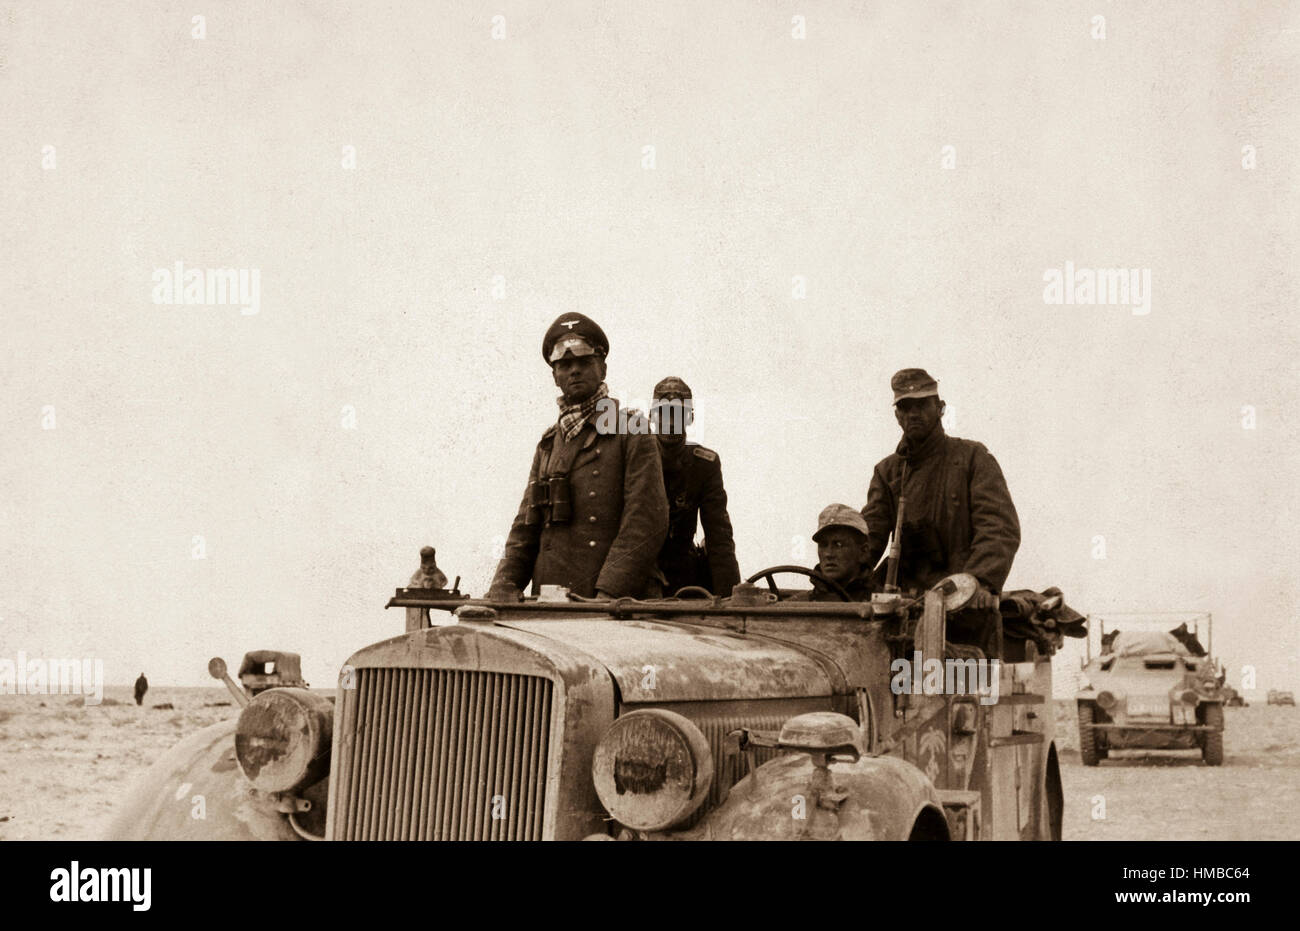 Generale Rommel bei der 15. Panzer-Division zwischen Tobruk und Sidi Omar. Generale Rommel con la XV Panzer Division tra Tobruk e Sidi Omar. Libia, Janurary o Novembre 24, 1941. Foto Stock